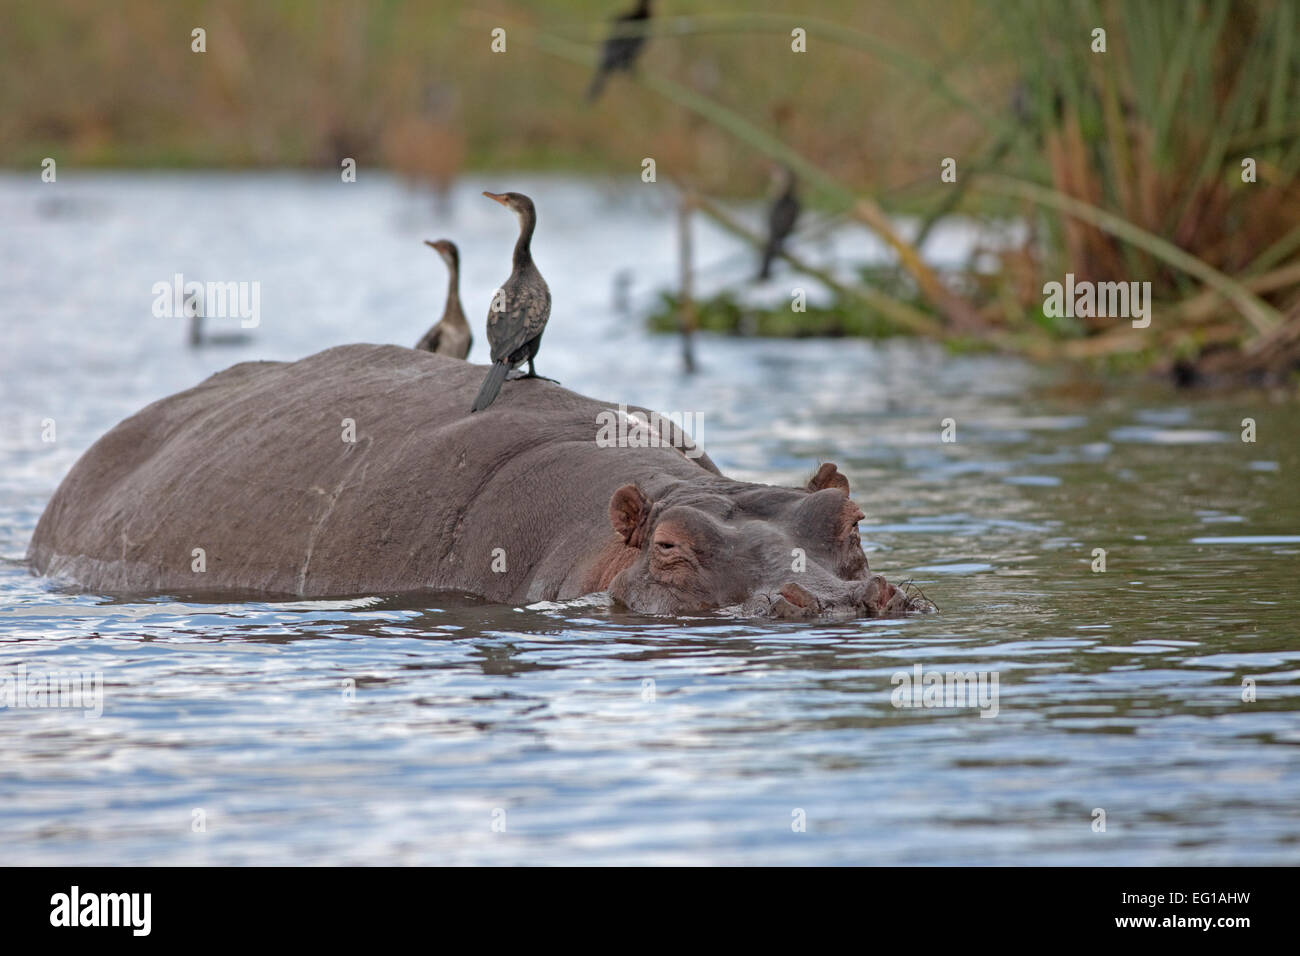 gloria the hippo lying down